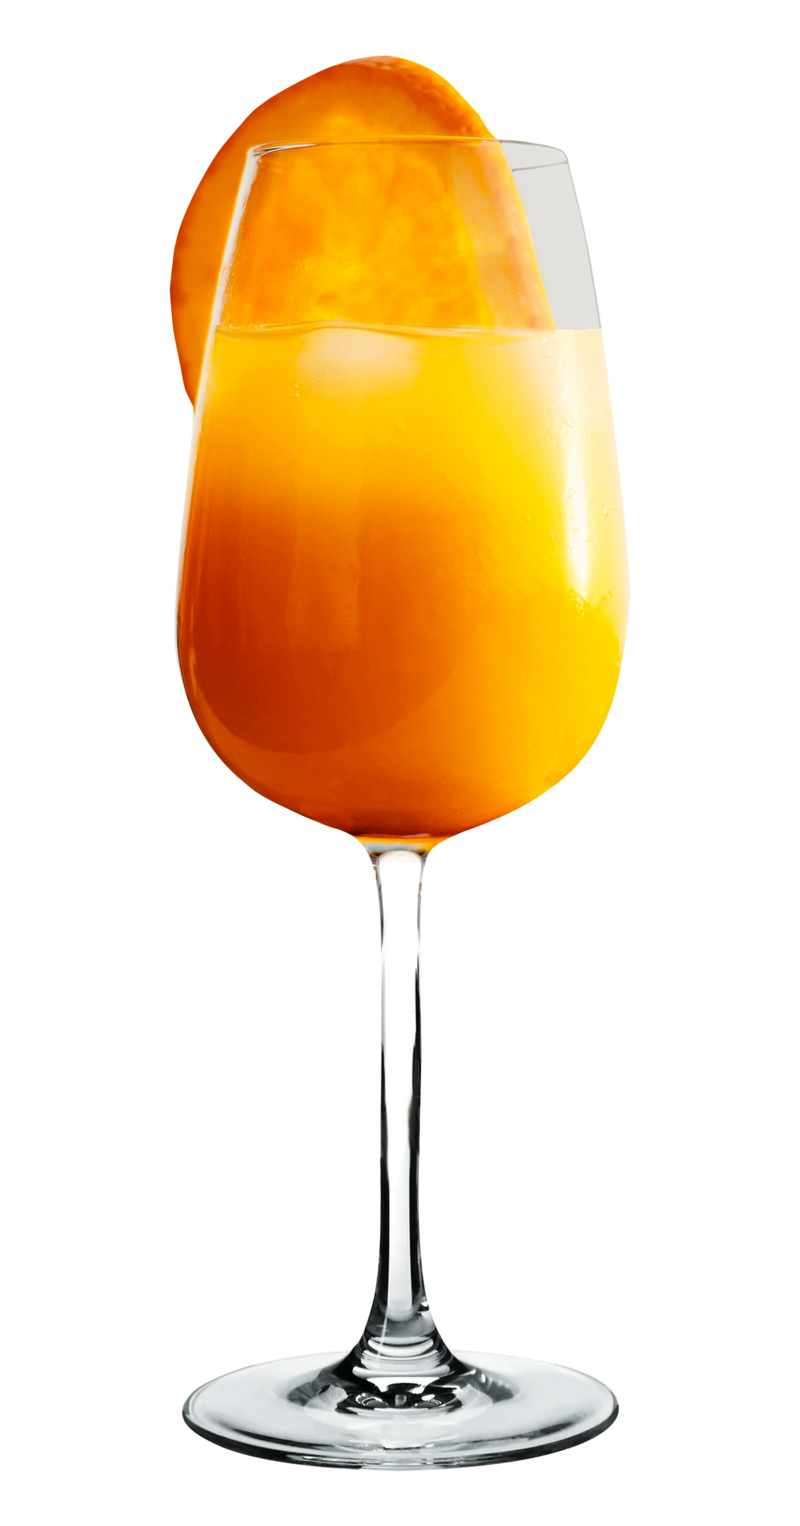 Cocktail glass - Wikipedia